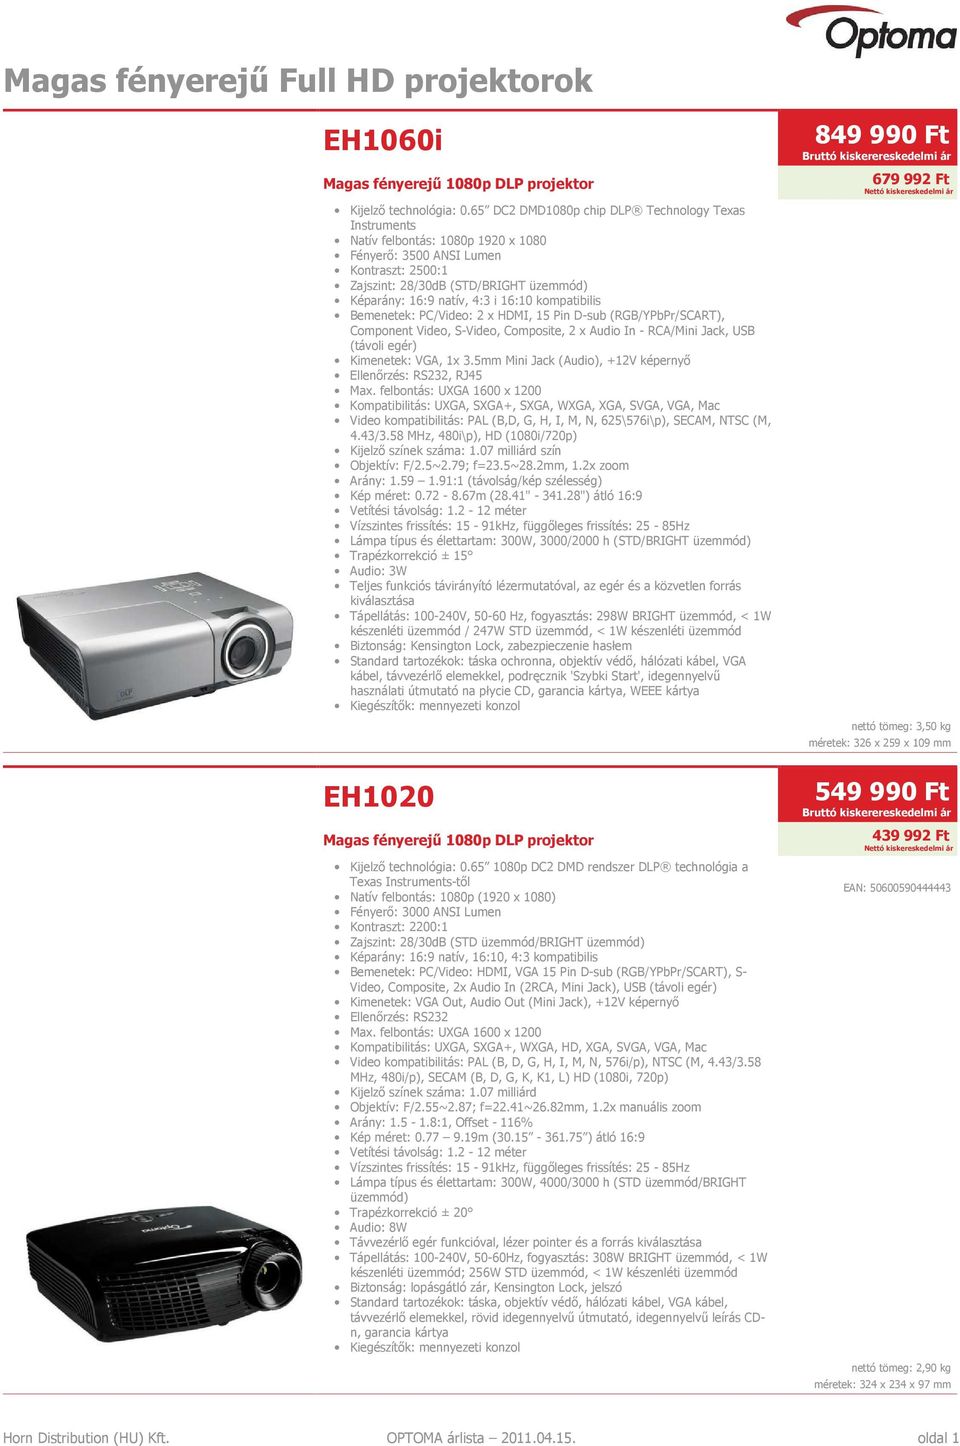 kompatibilis Bemenetek: PC/Video: 2 x HDMI, 15 Pin D-sub (RGB/YPbPr/SCART), Component Video, S-Video, Composite, 2 x Audio In - RCA/Mini Jack, USB (távoli egér) Kimenetek: VGA, 1x 3.